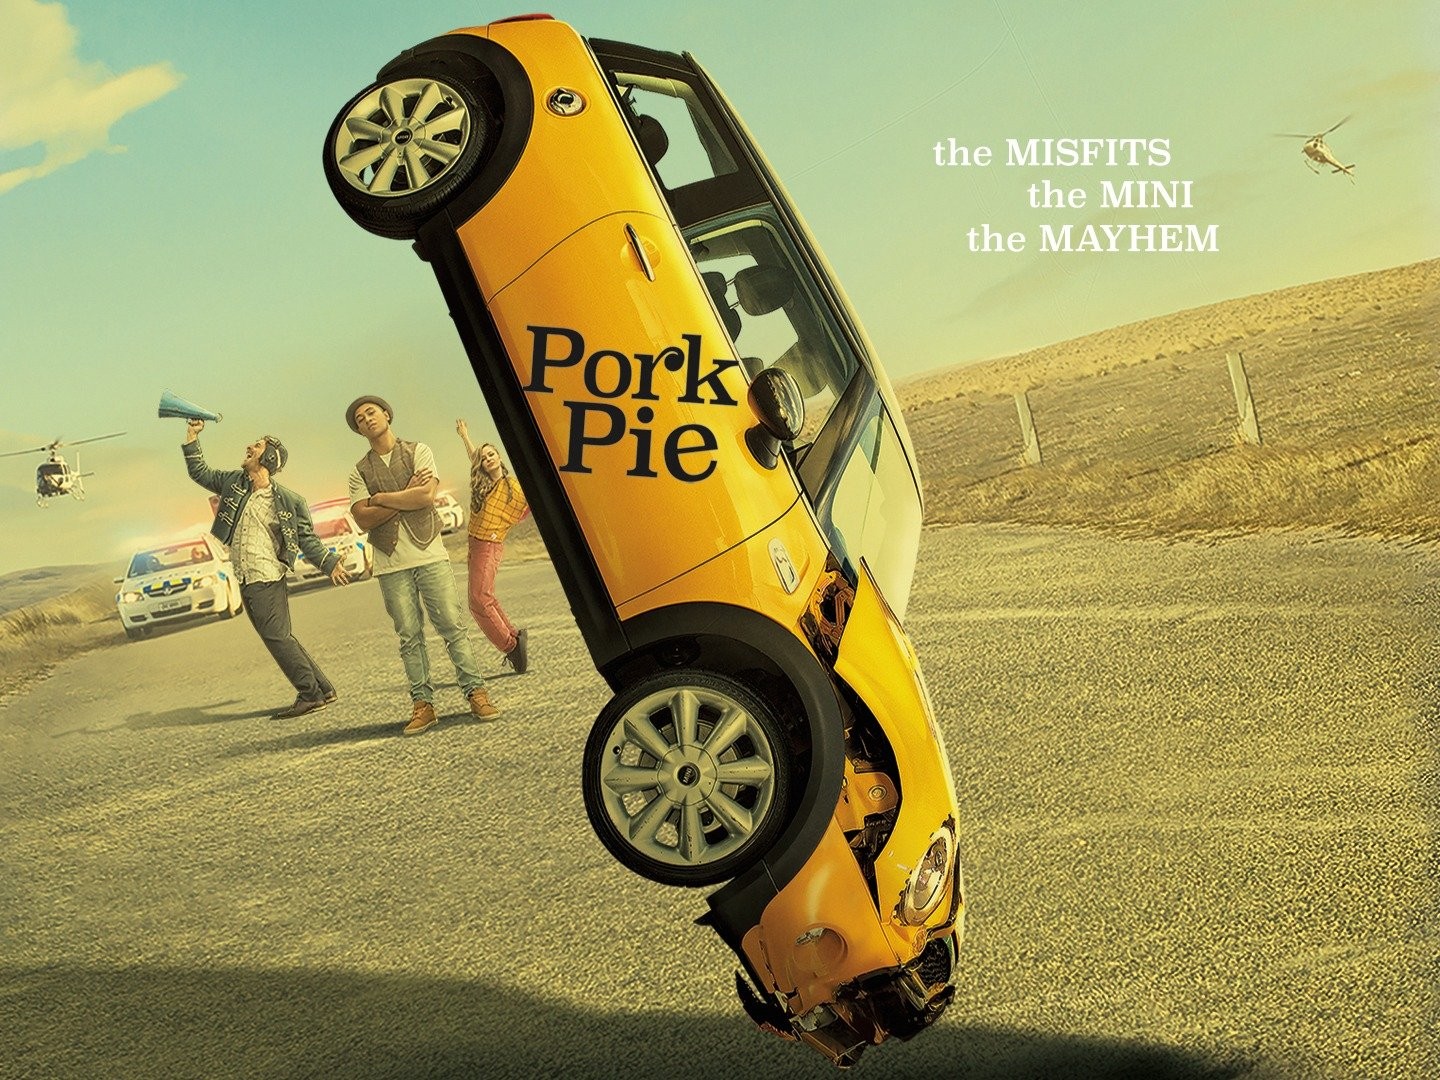 Movie Review: Pork Pie - an update that lacks the original's spice